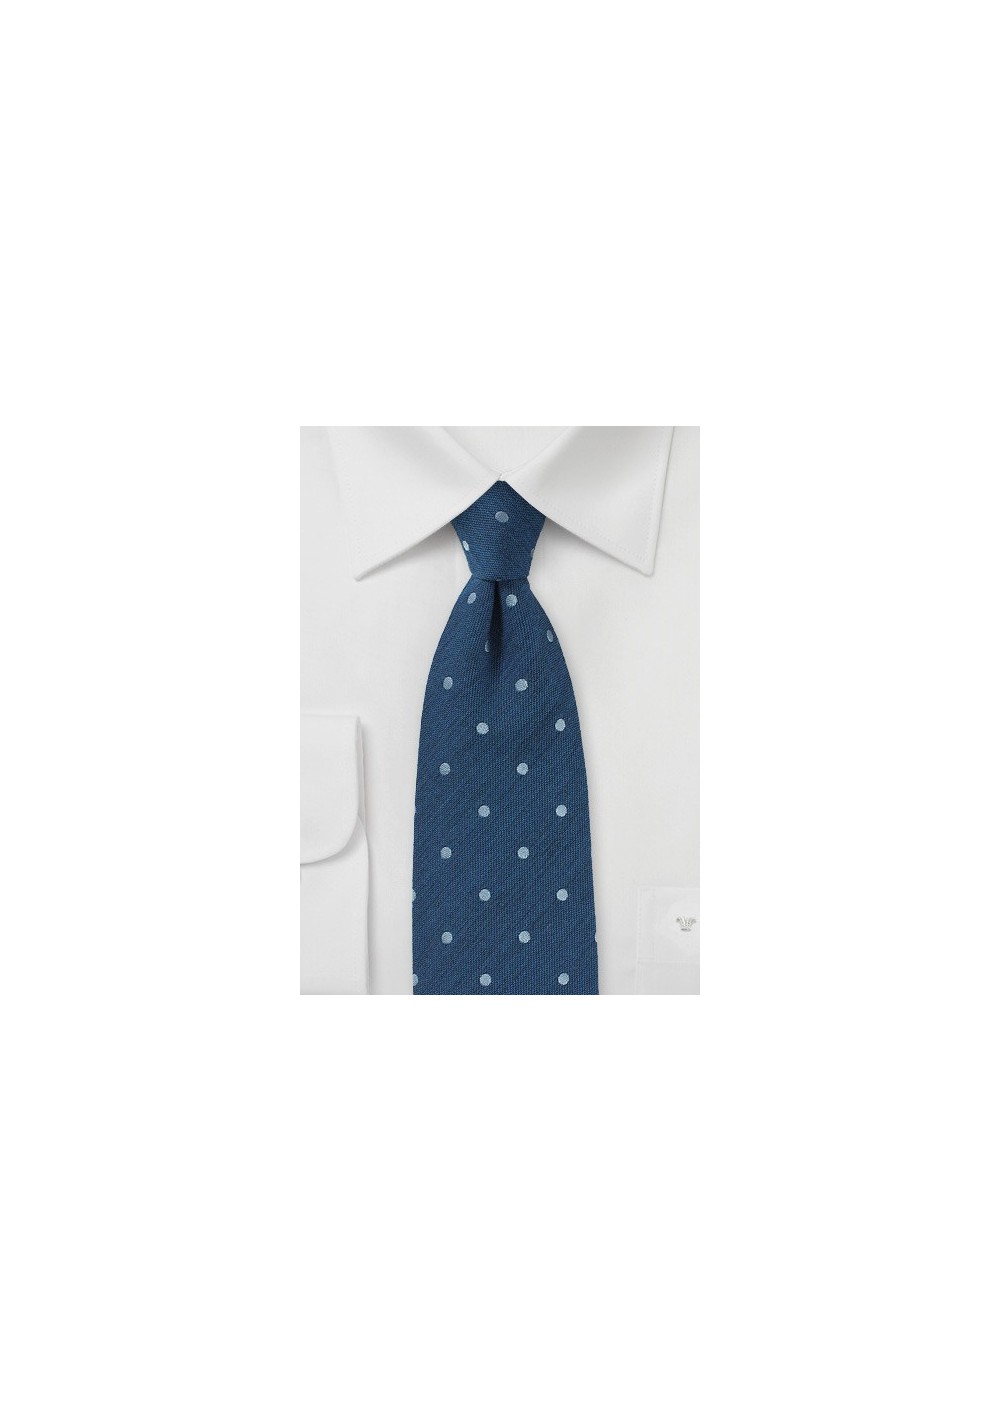 Raw Silk Polka Dot Tie in Denim Blue